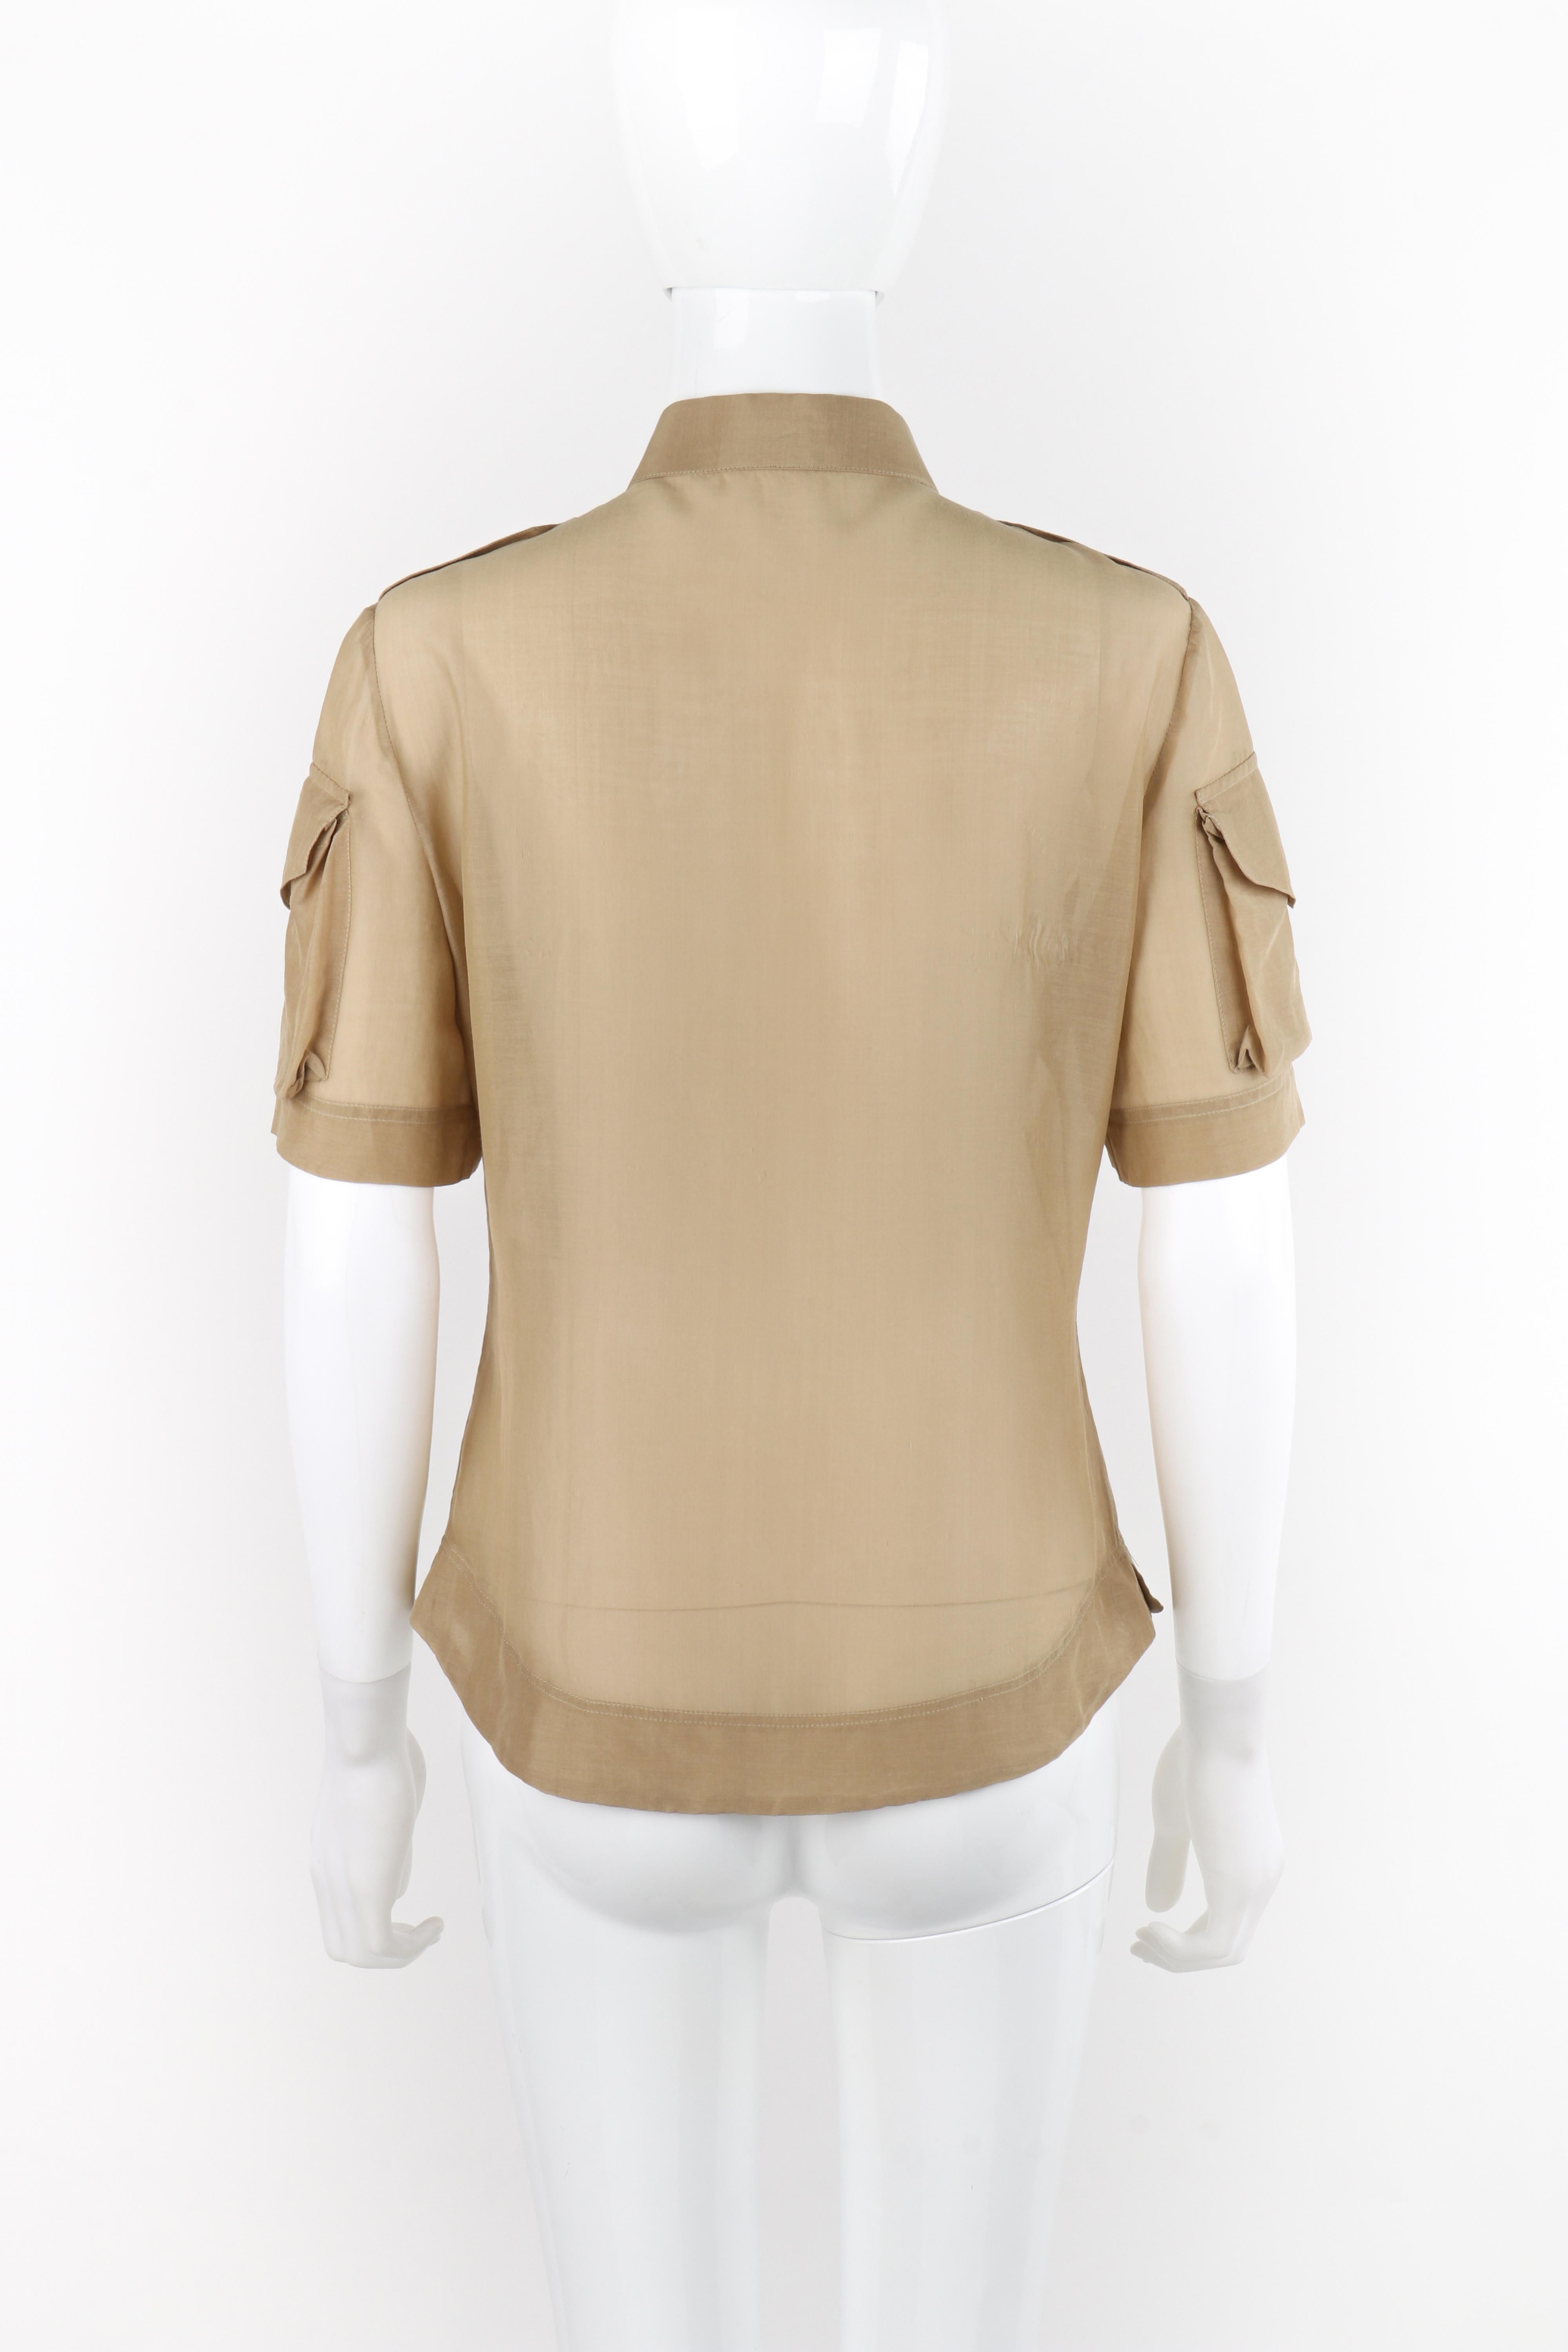 Women's ALEXANDER McQUEEN S/S 2009 Tan Semi Sheer Silk Pocket Sleeve Button-Down Top